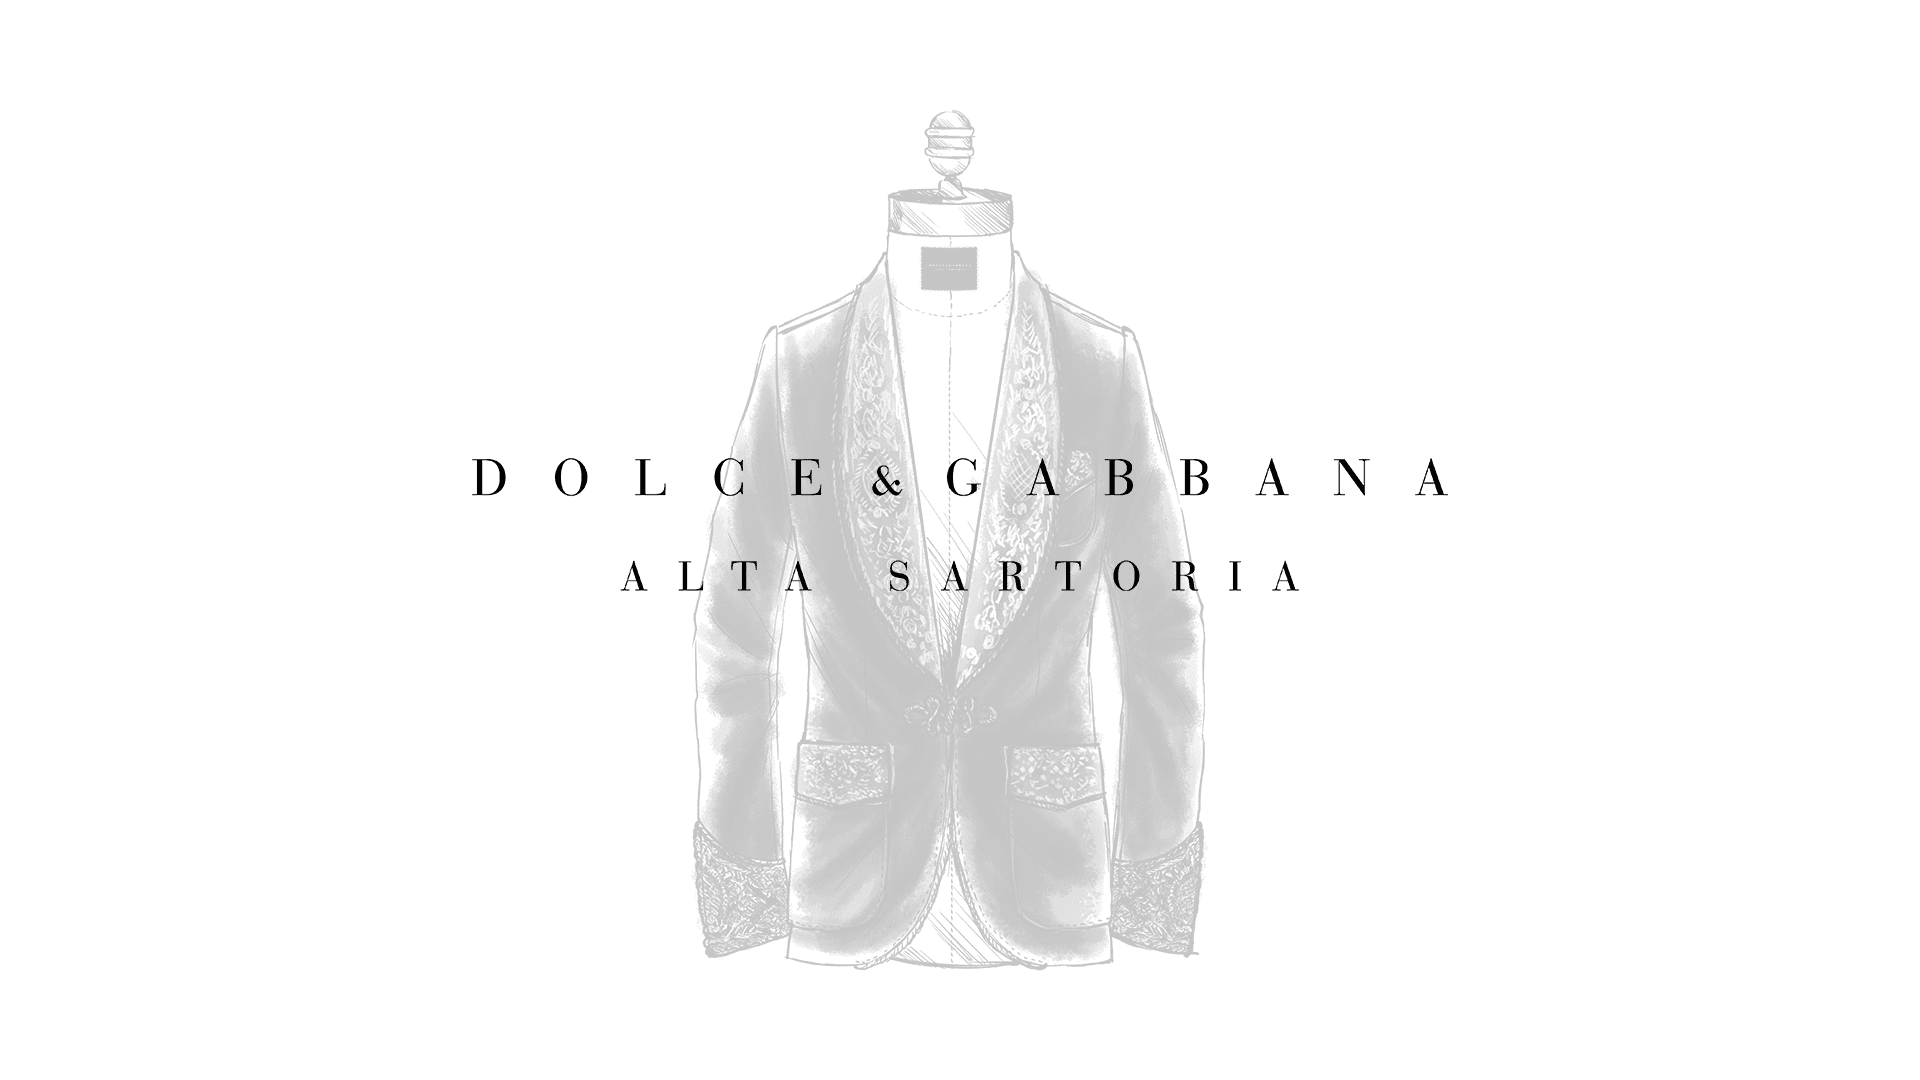 Mr. Iain Dodsworth - signed by Dolce&Gabbana Alta Sartoria